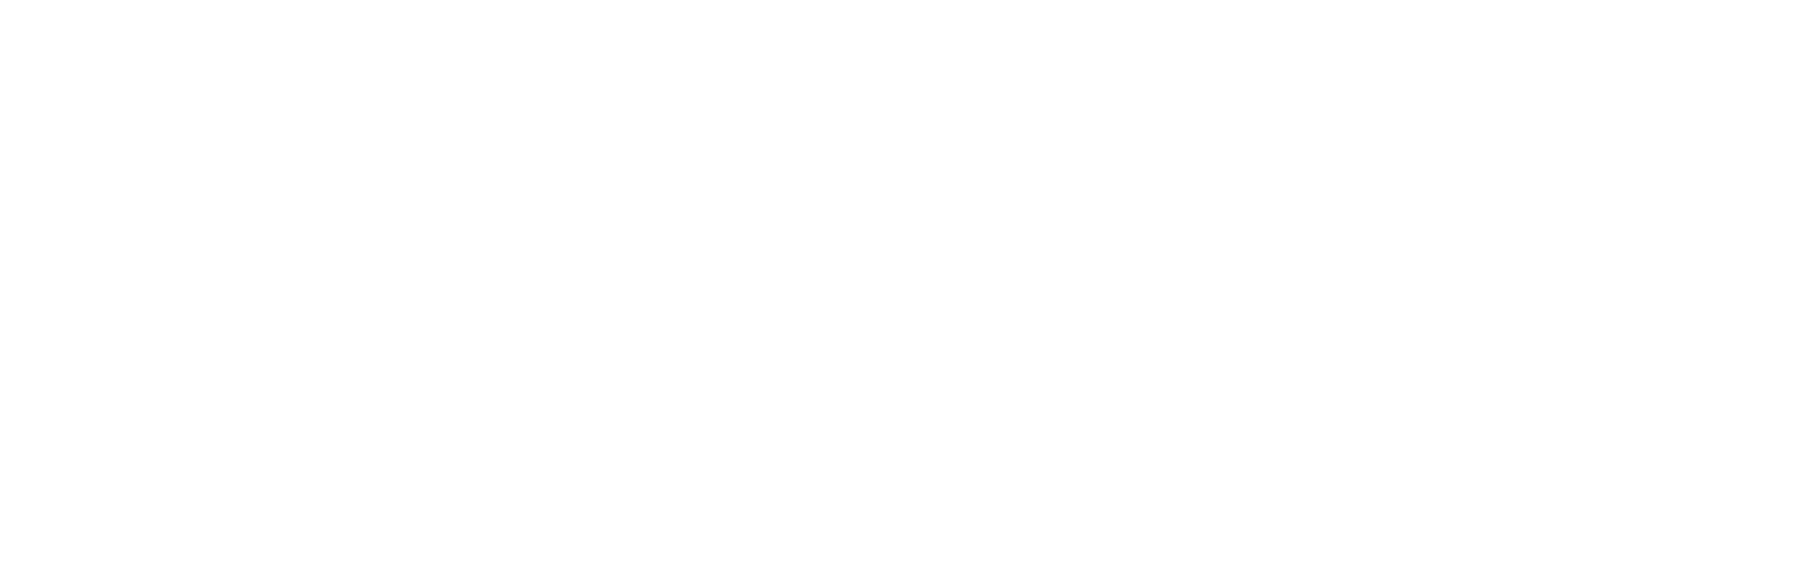 Restaurant: Impossible logo